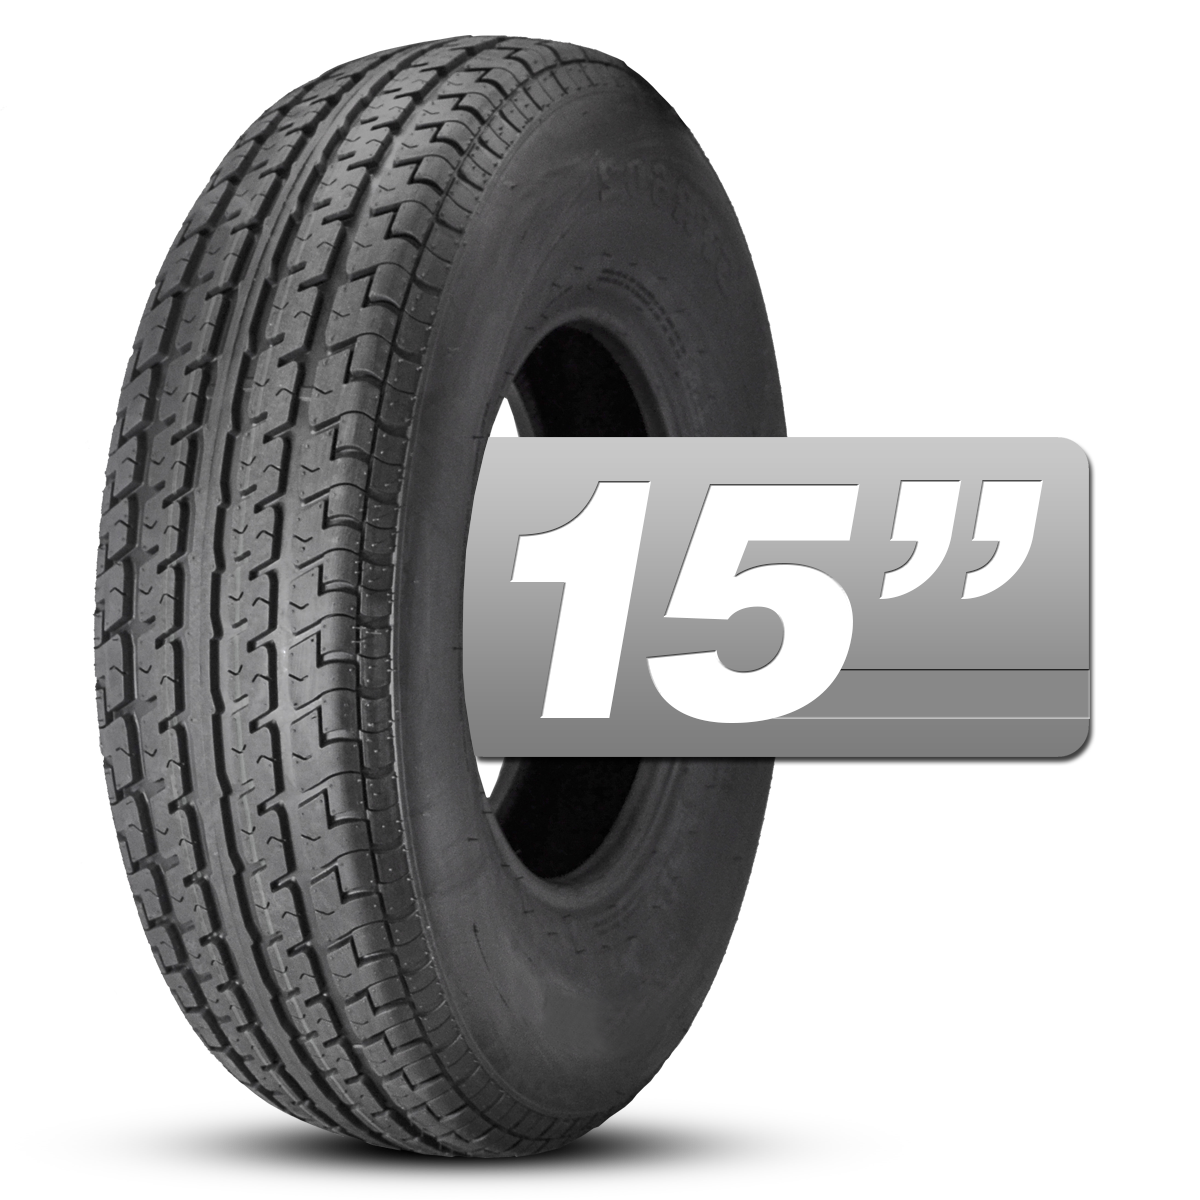 Shop 15 Inch Radial Trailer Tires in Load C & D 2057515 205/75R15 ST205/75R15 225/75R15 2257515 ST225/75R15